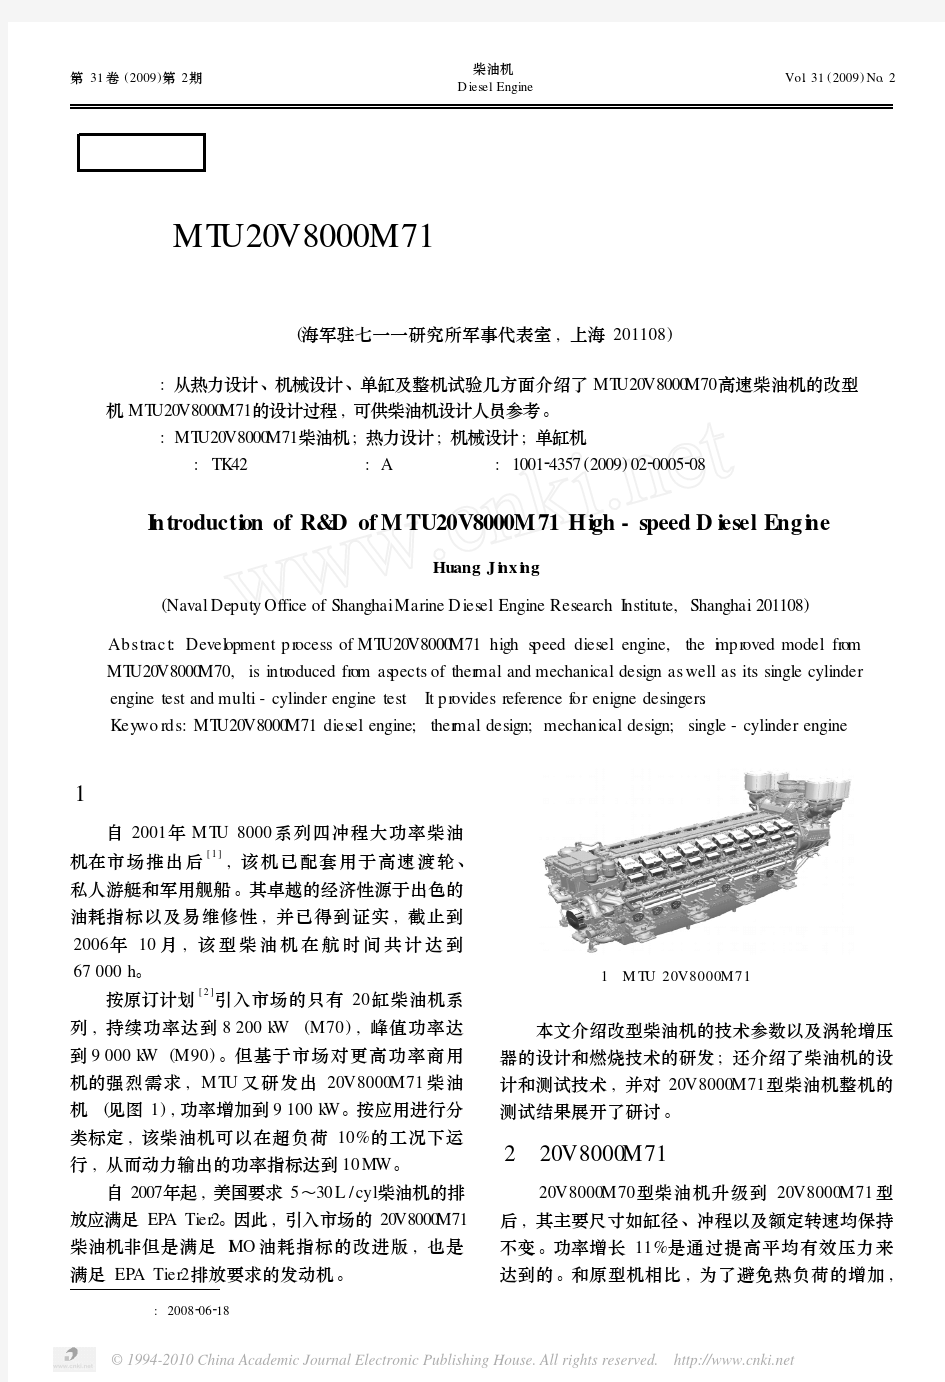 MTU20V8000M71型高速柴油机研发介绍